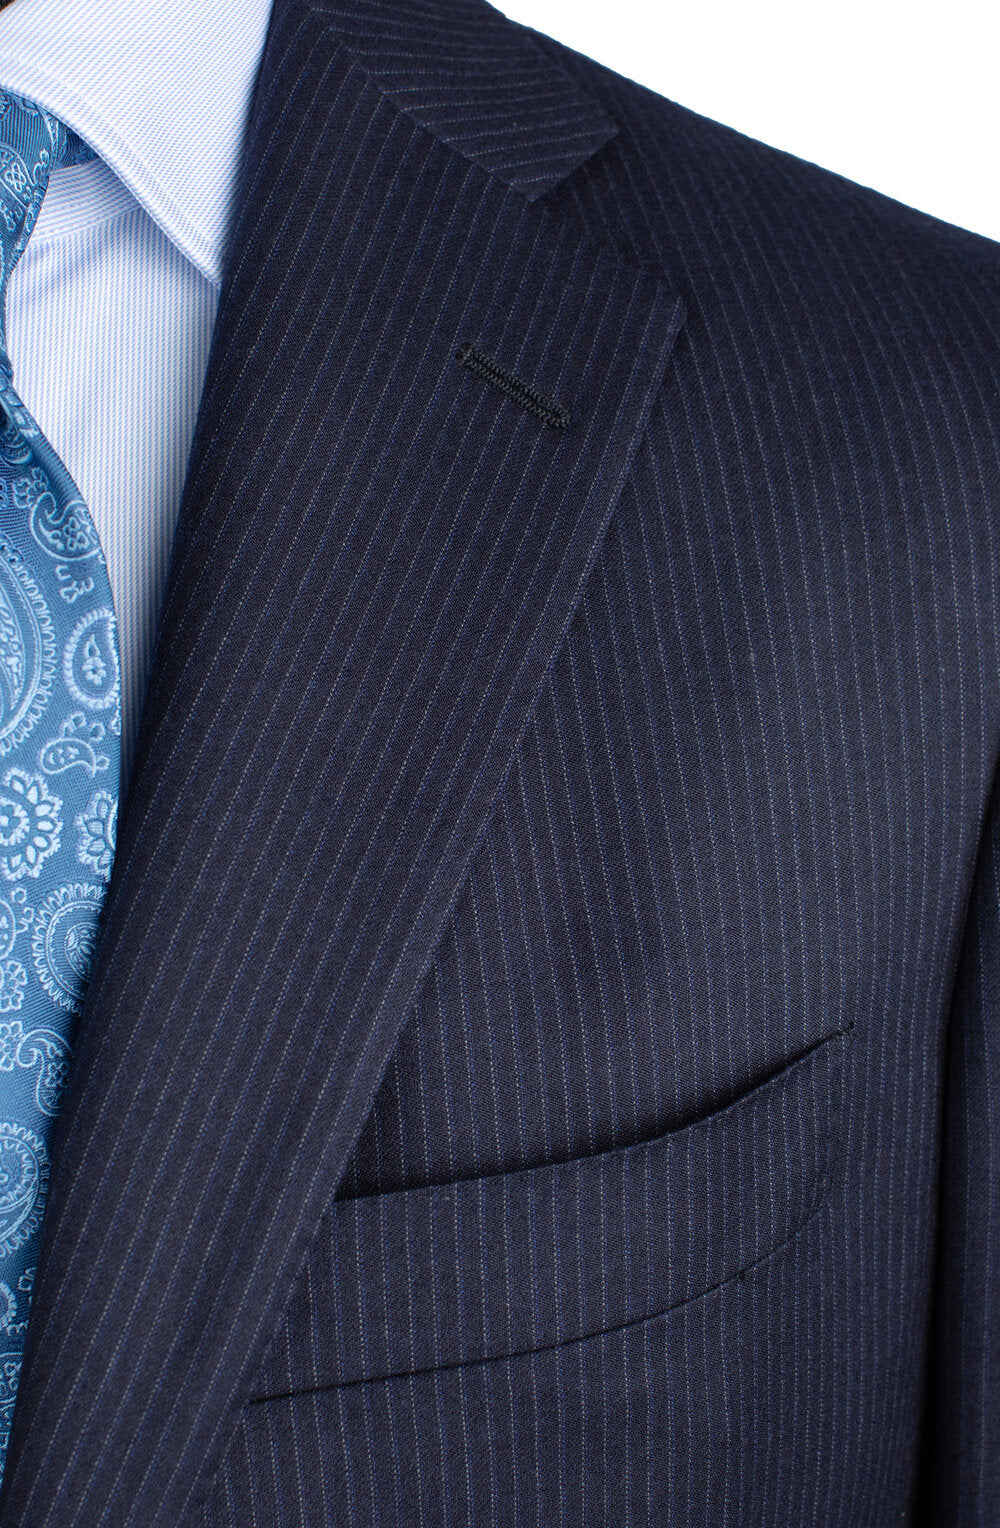 Belvest Flannel Suit in Navy Blue Pinstripes